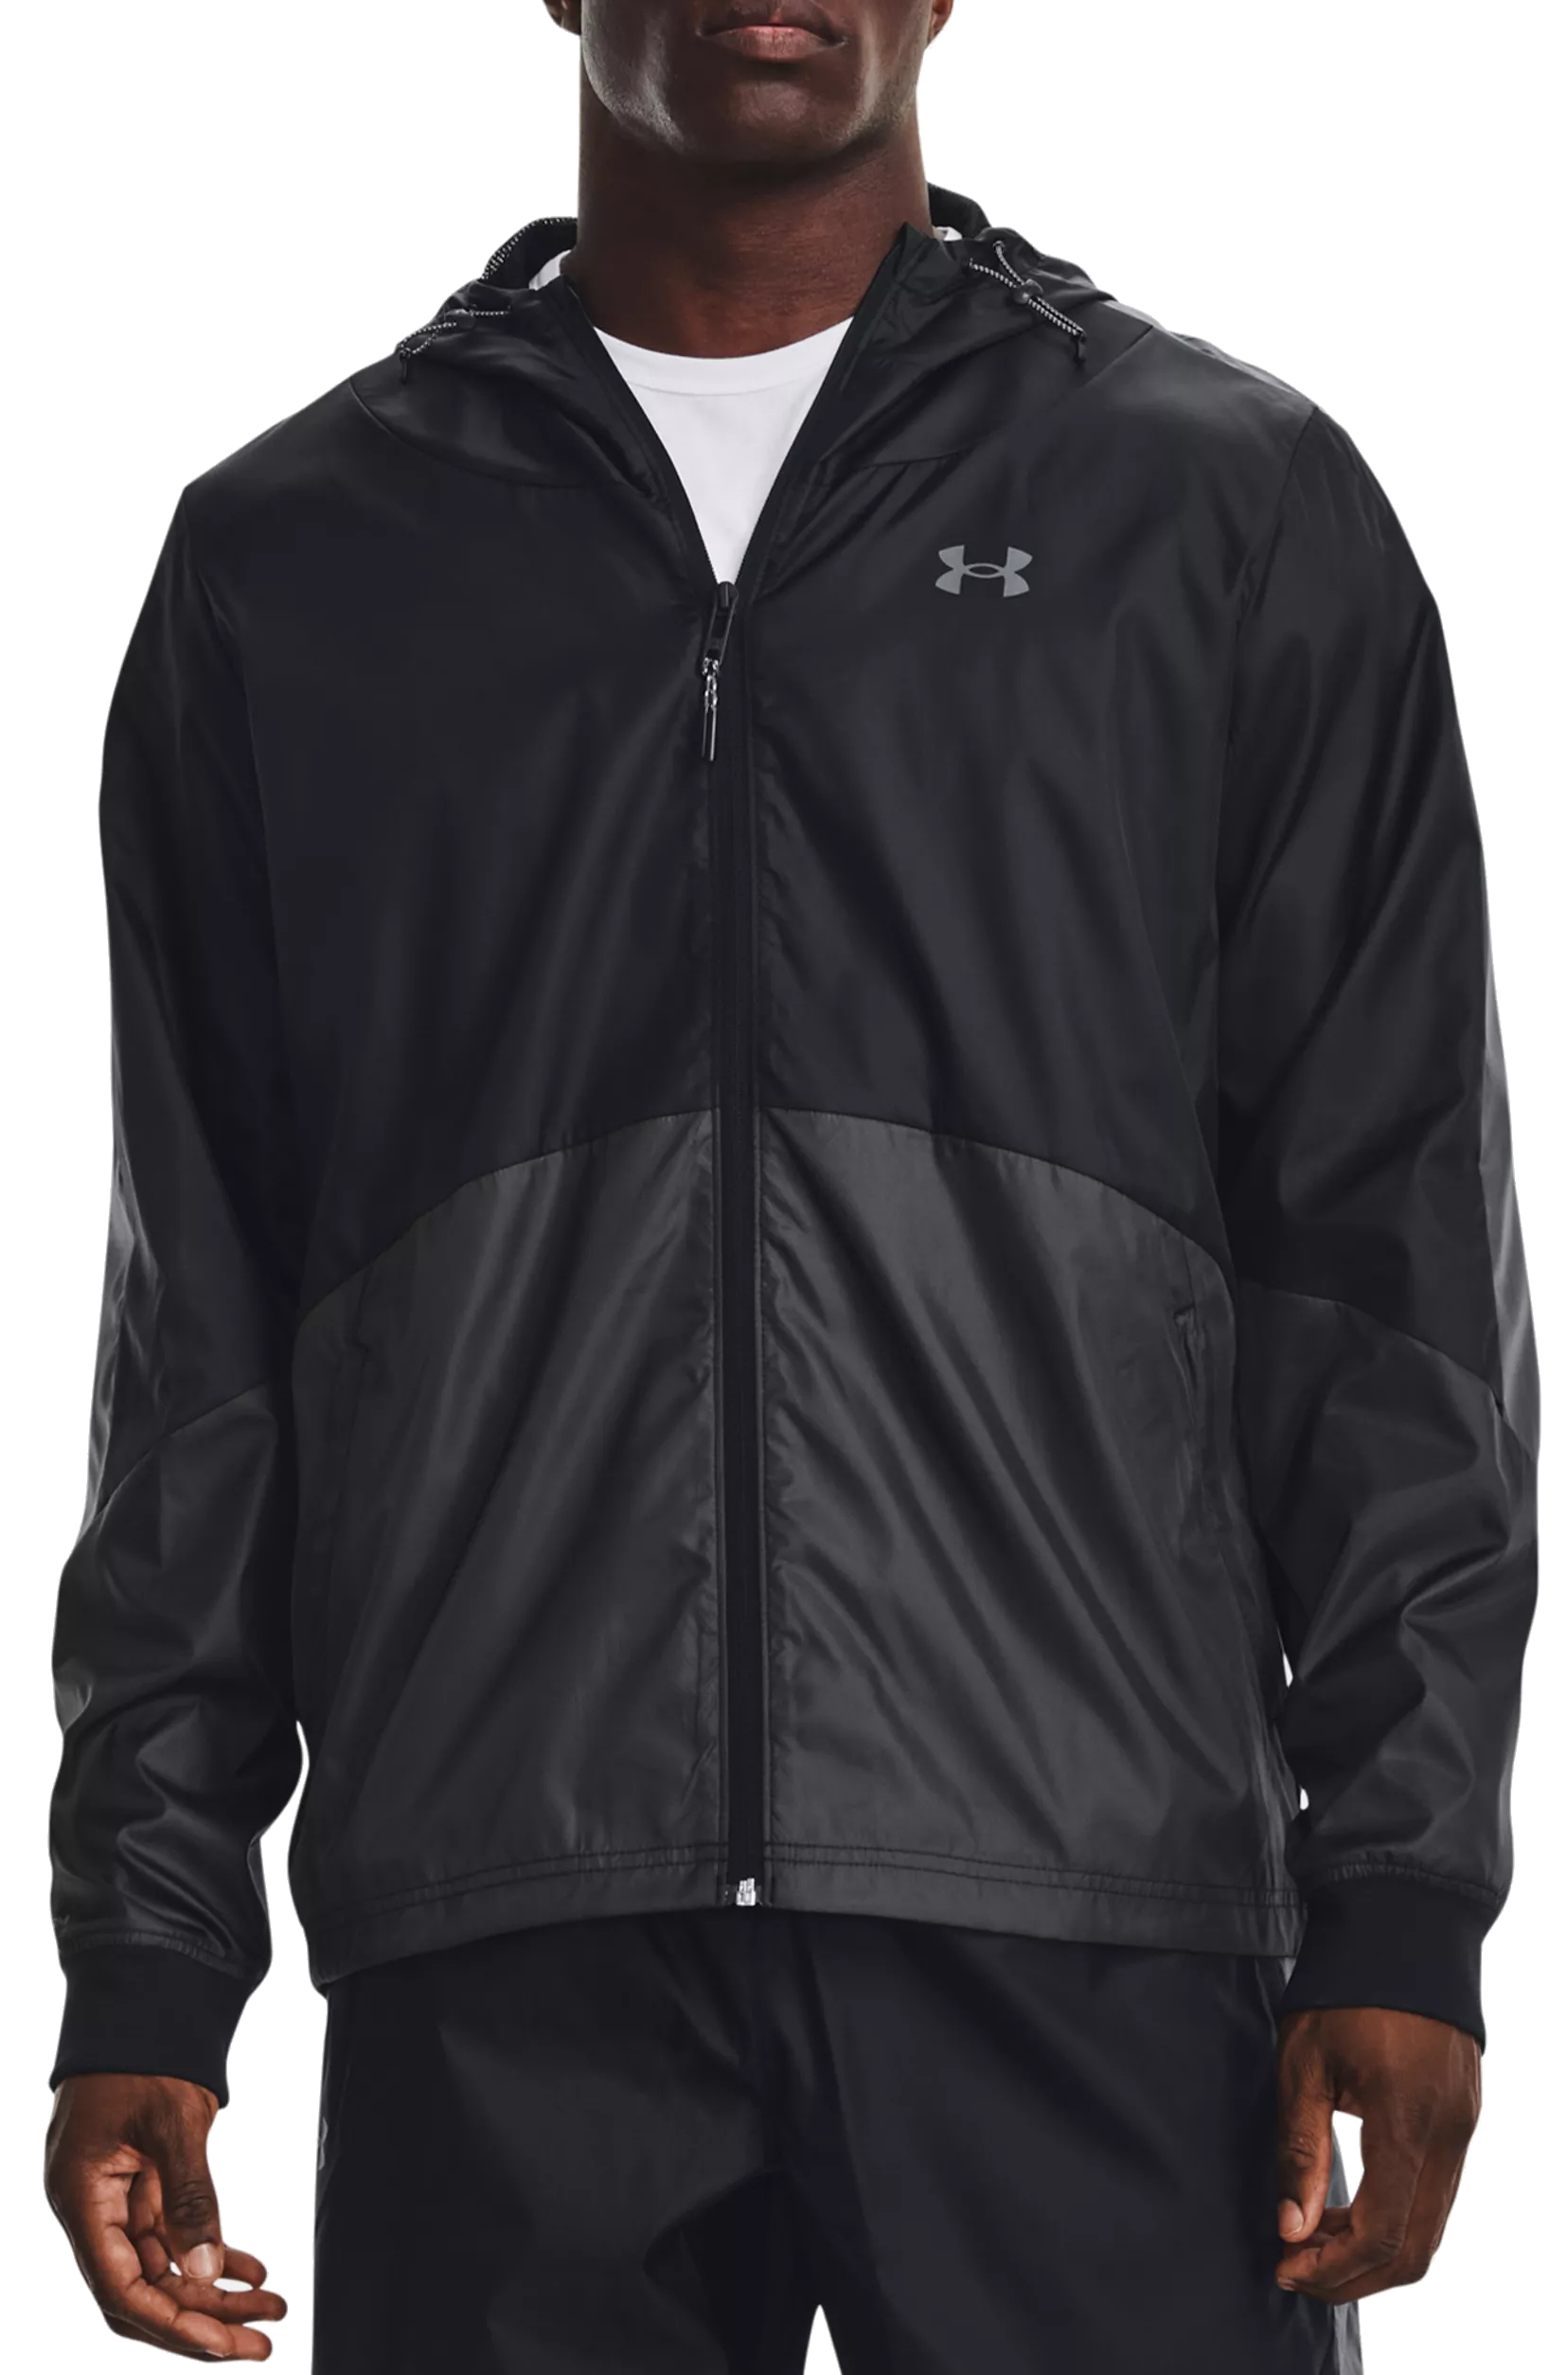 Hooded jacket Under Armour UA Legacy Windbreaker - Top4Running.com